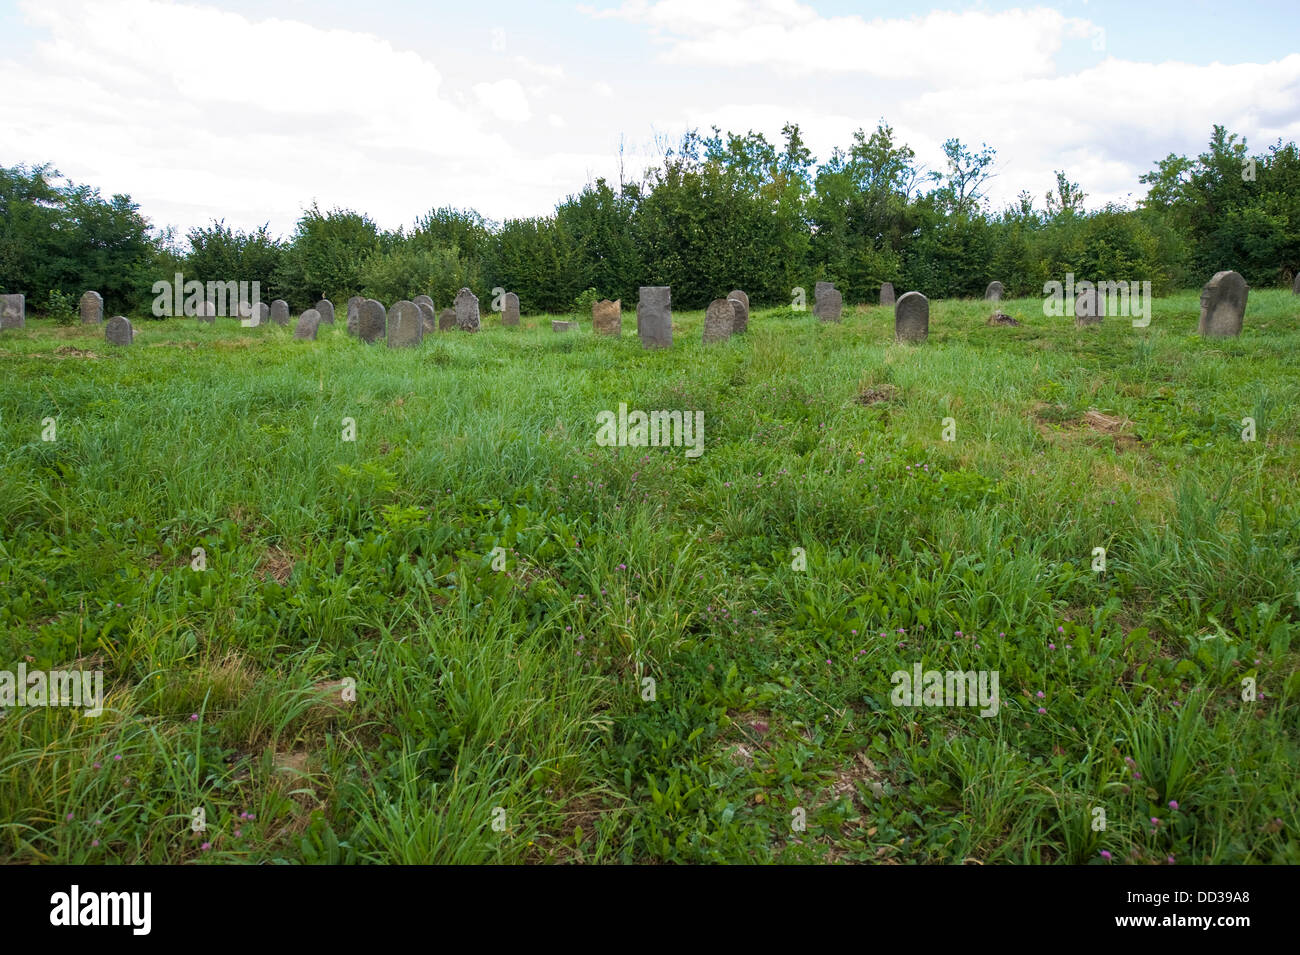 Jewish cemetery in Bodzentyn, south-central Poland. Stock Photo